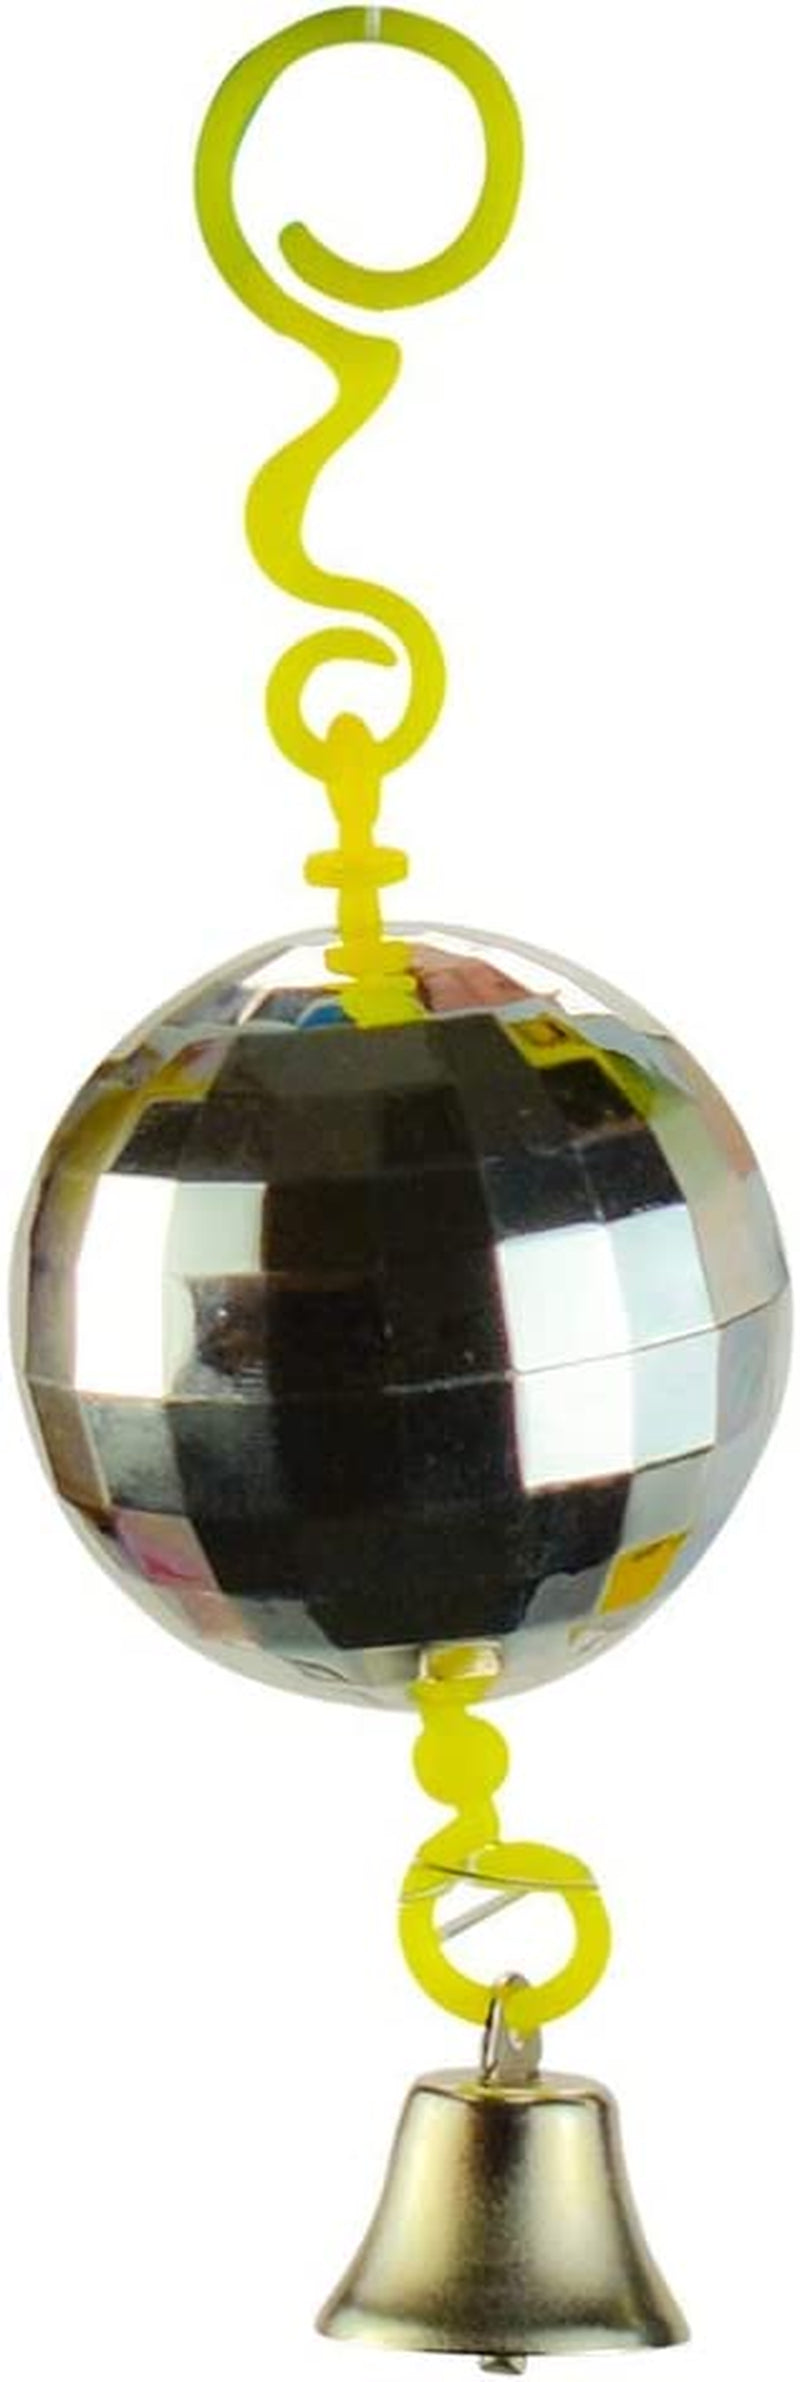 JW Pet Company Activitoy Disco Ball Small Bird Toy, Colors Vary